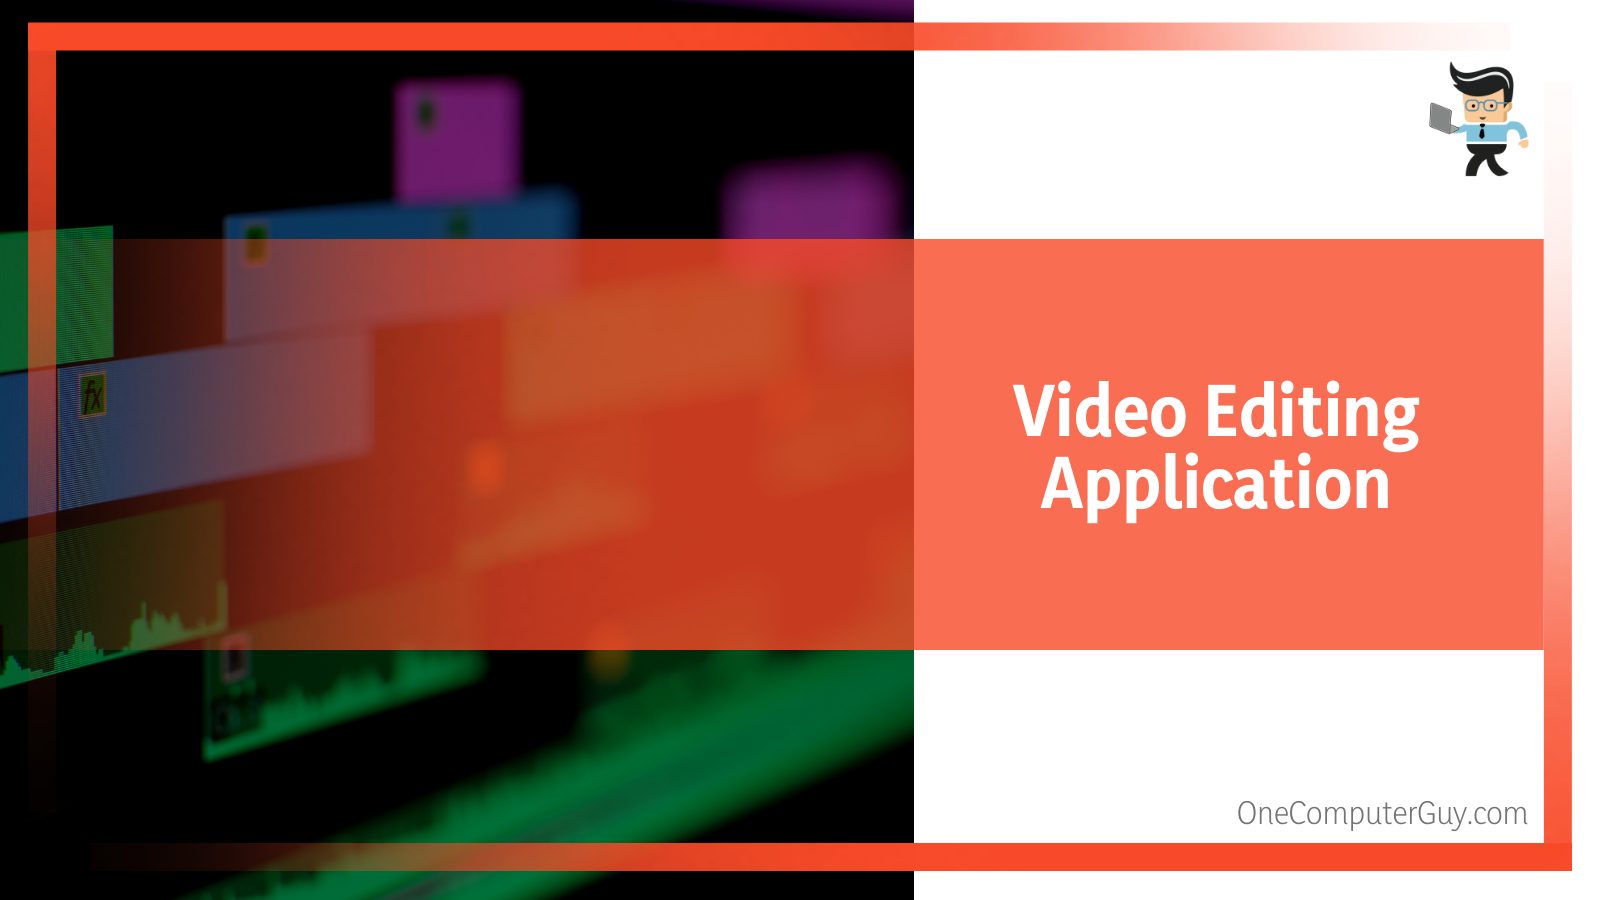 Wondershare Video editing application